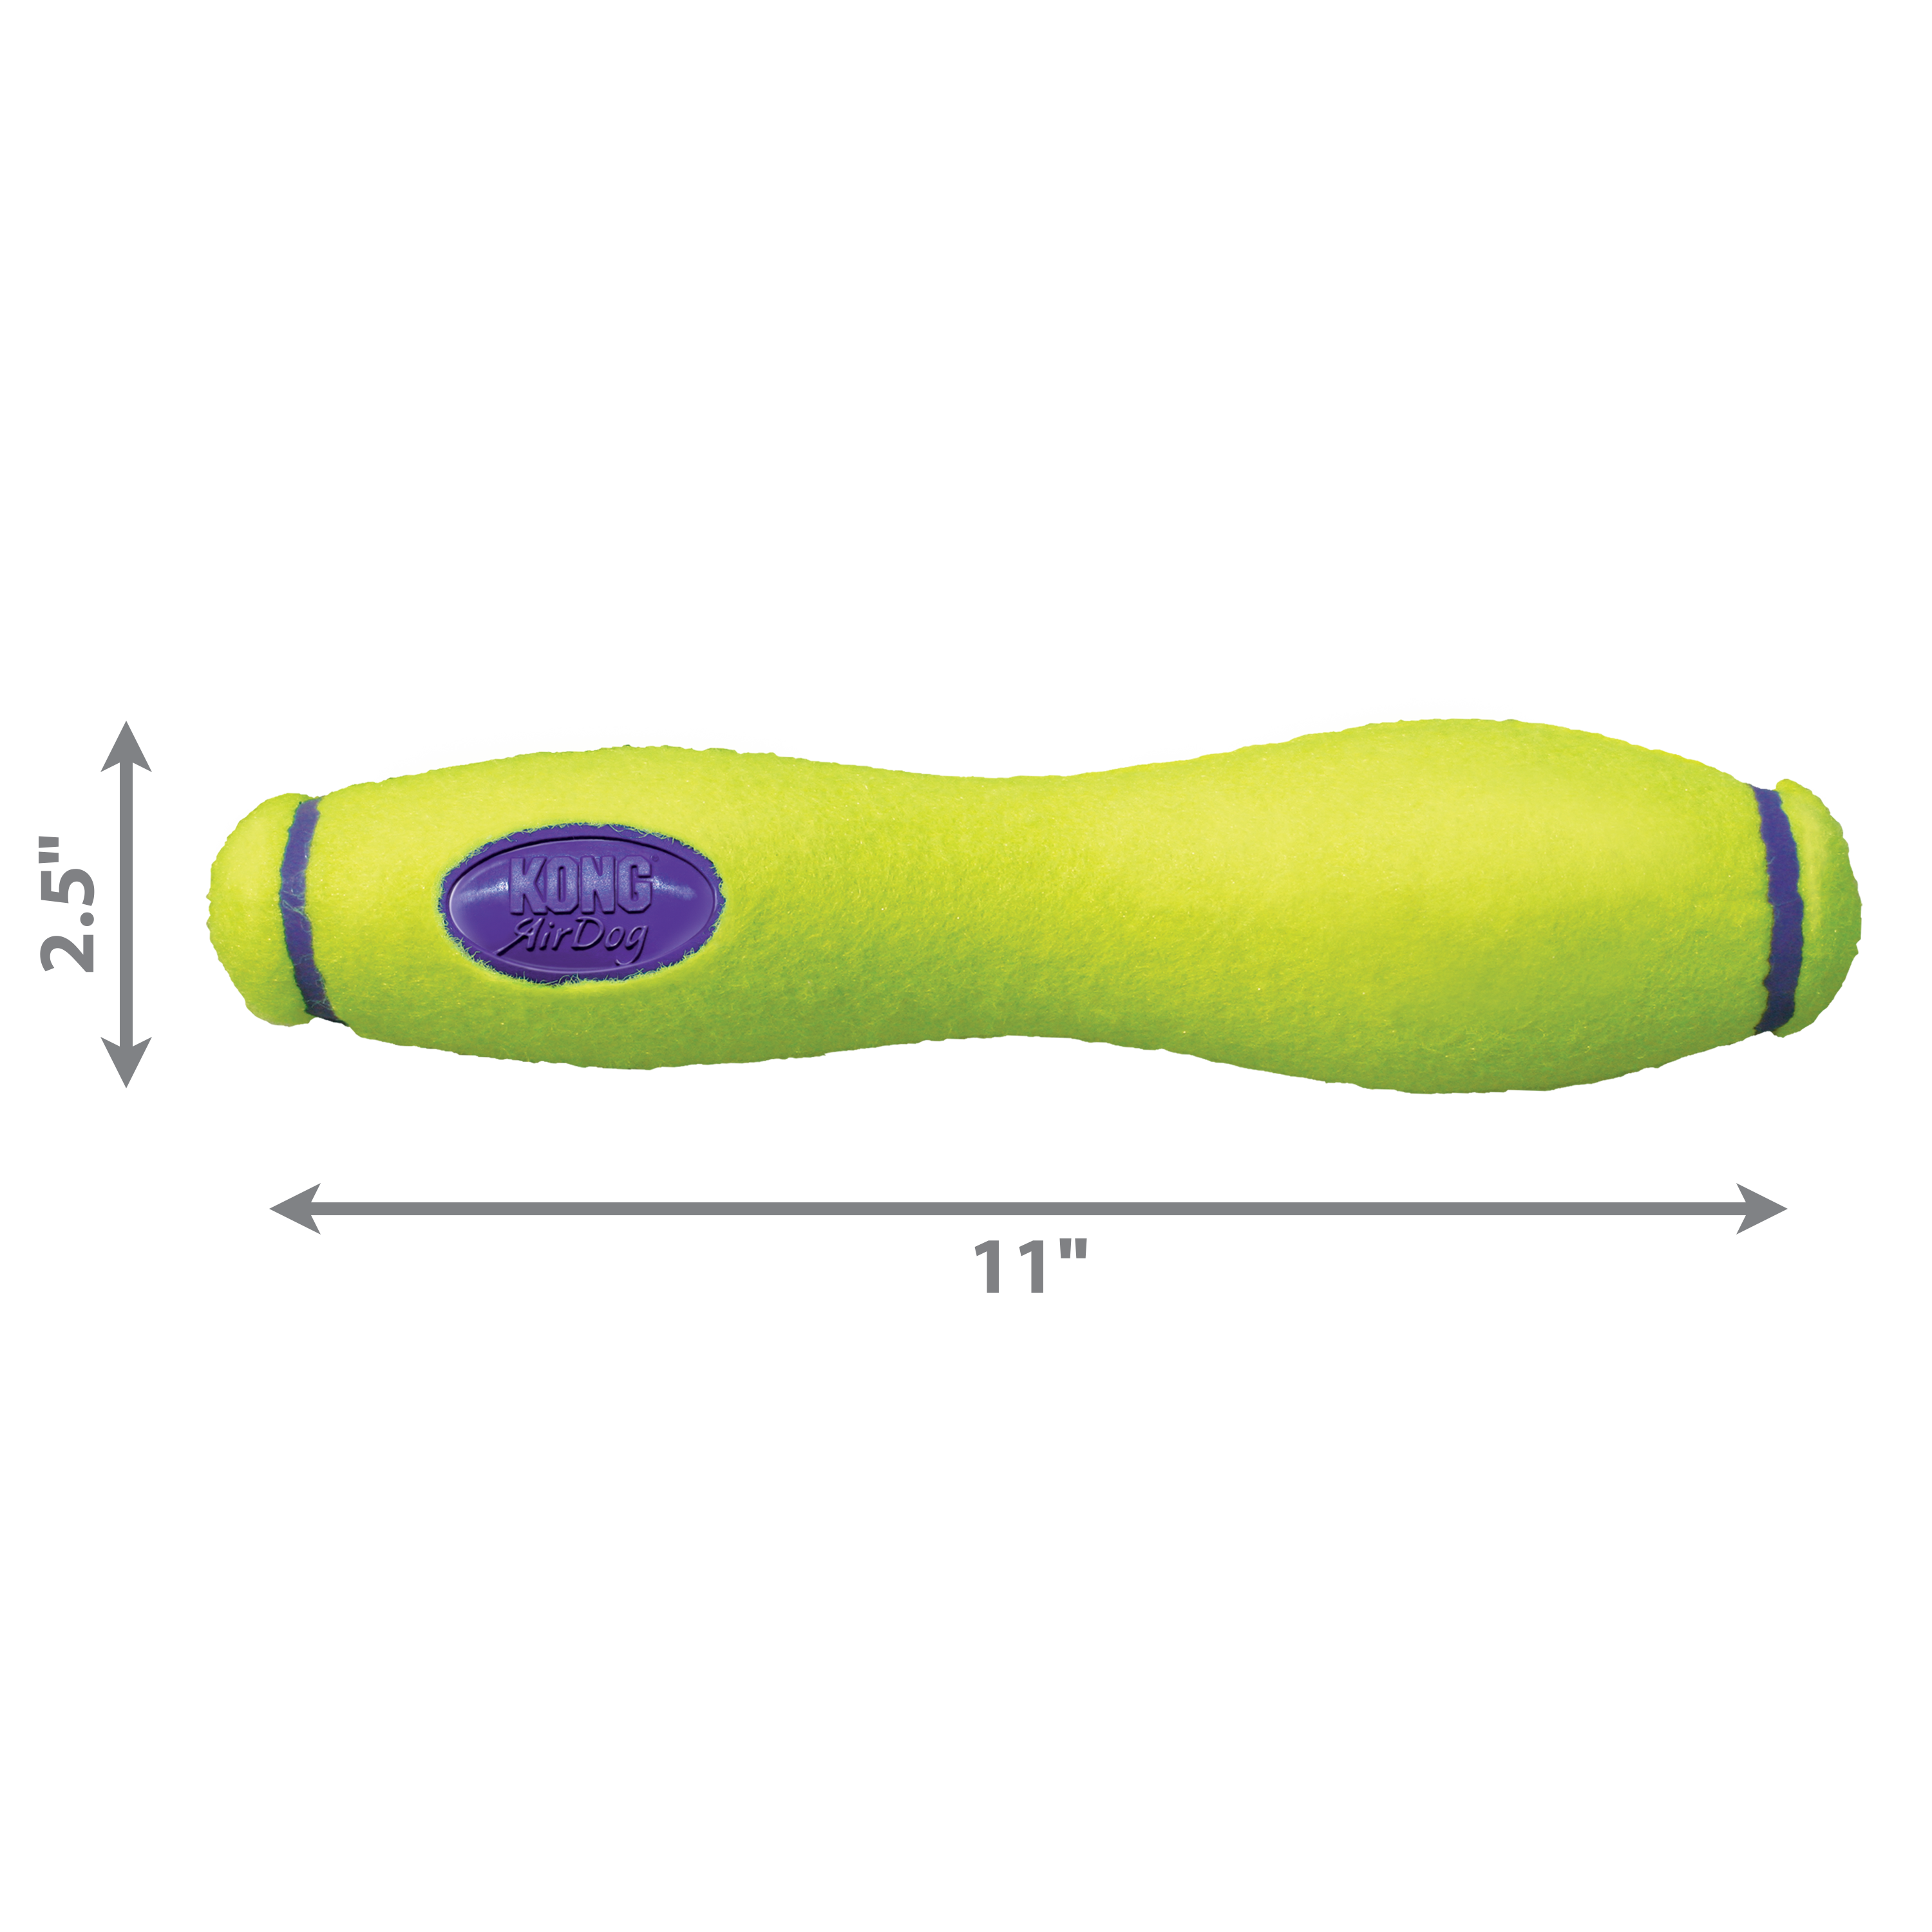 AirDog Squeaker Stick dimoffpack imagen de producto